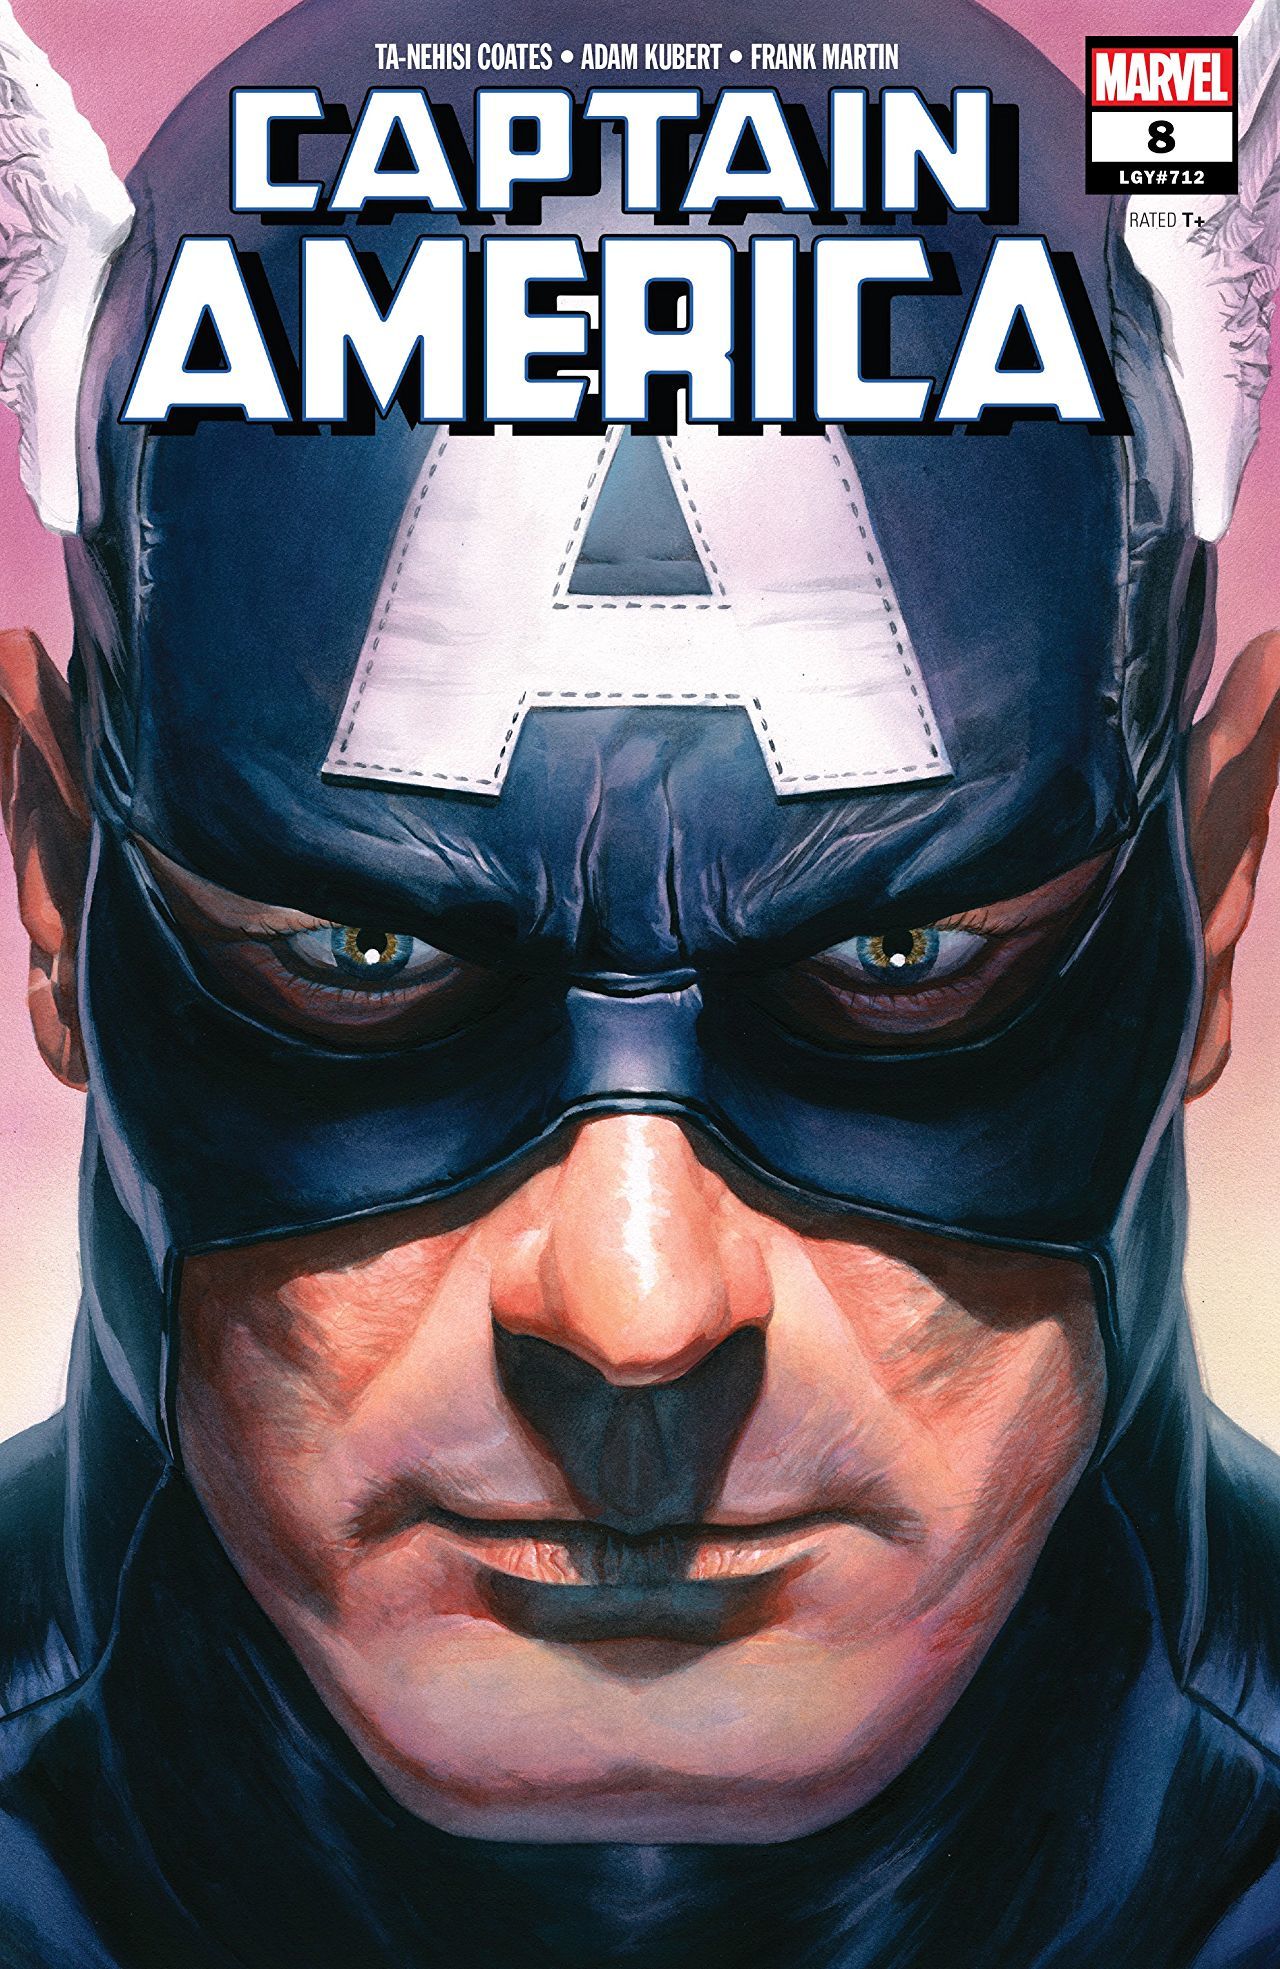 Captain America #8 cover